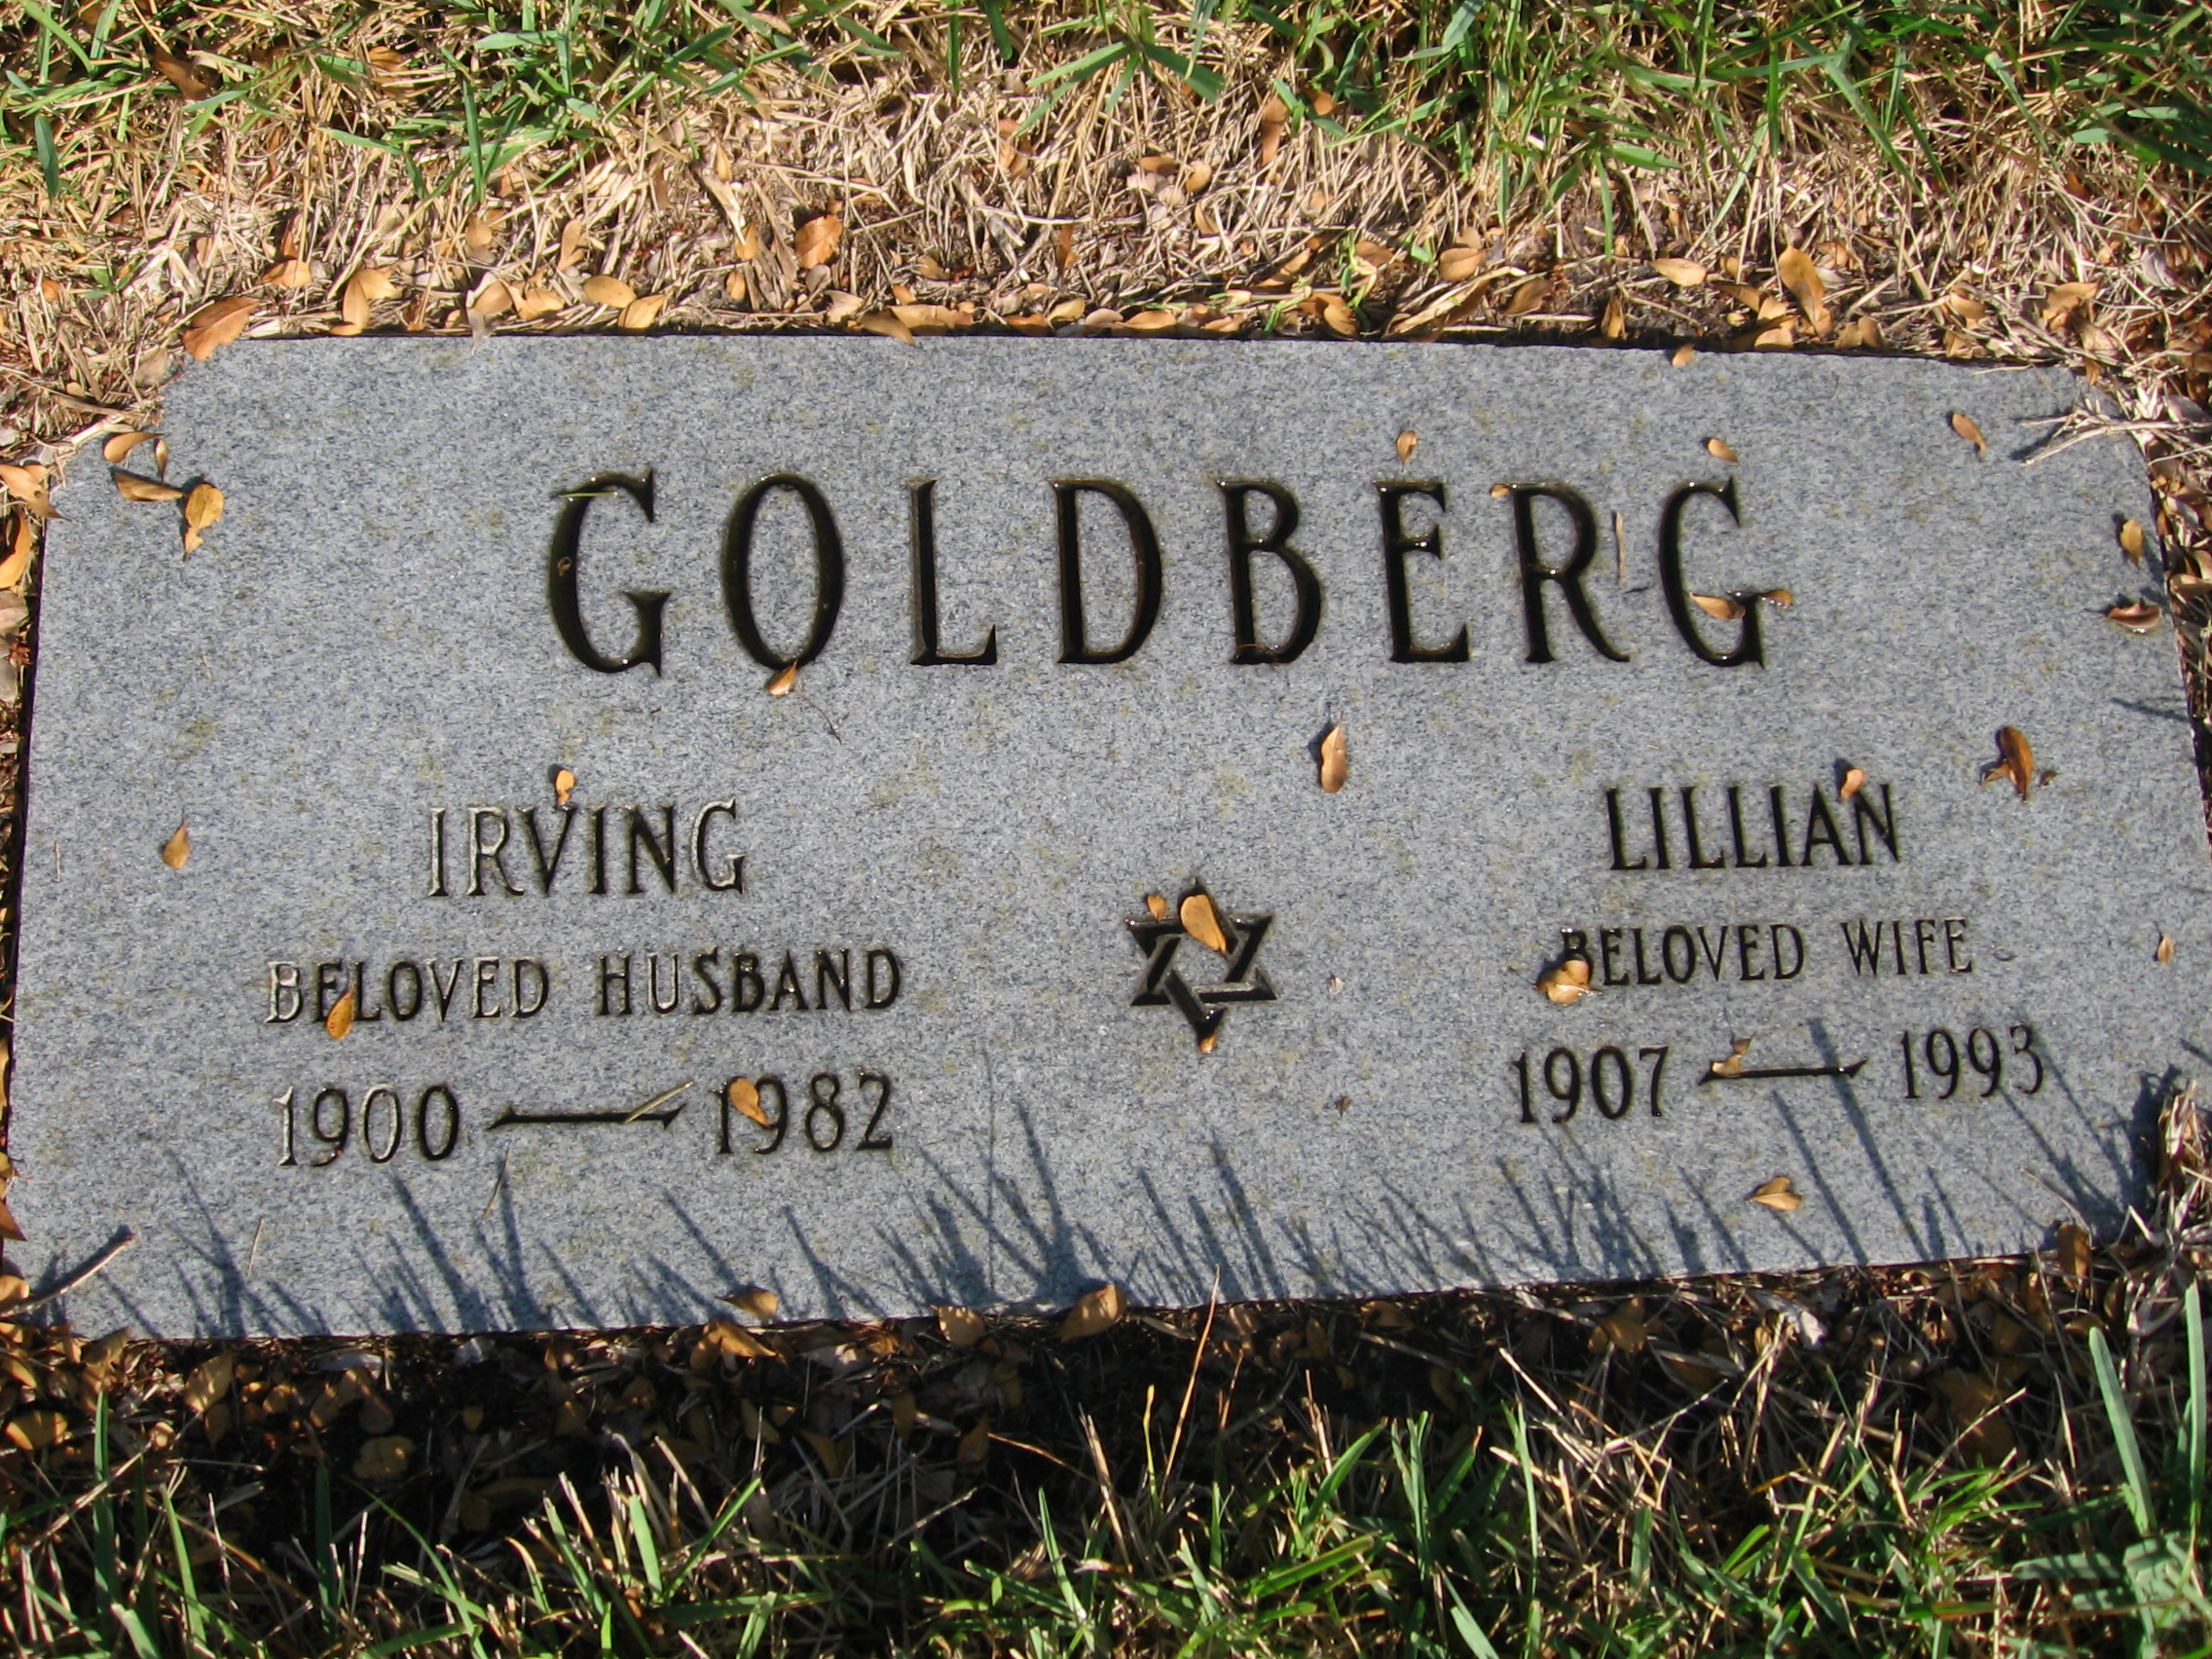 Lillian Goldberg